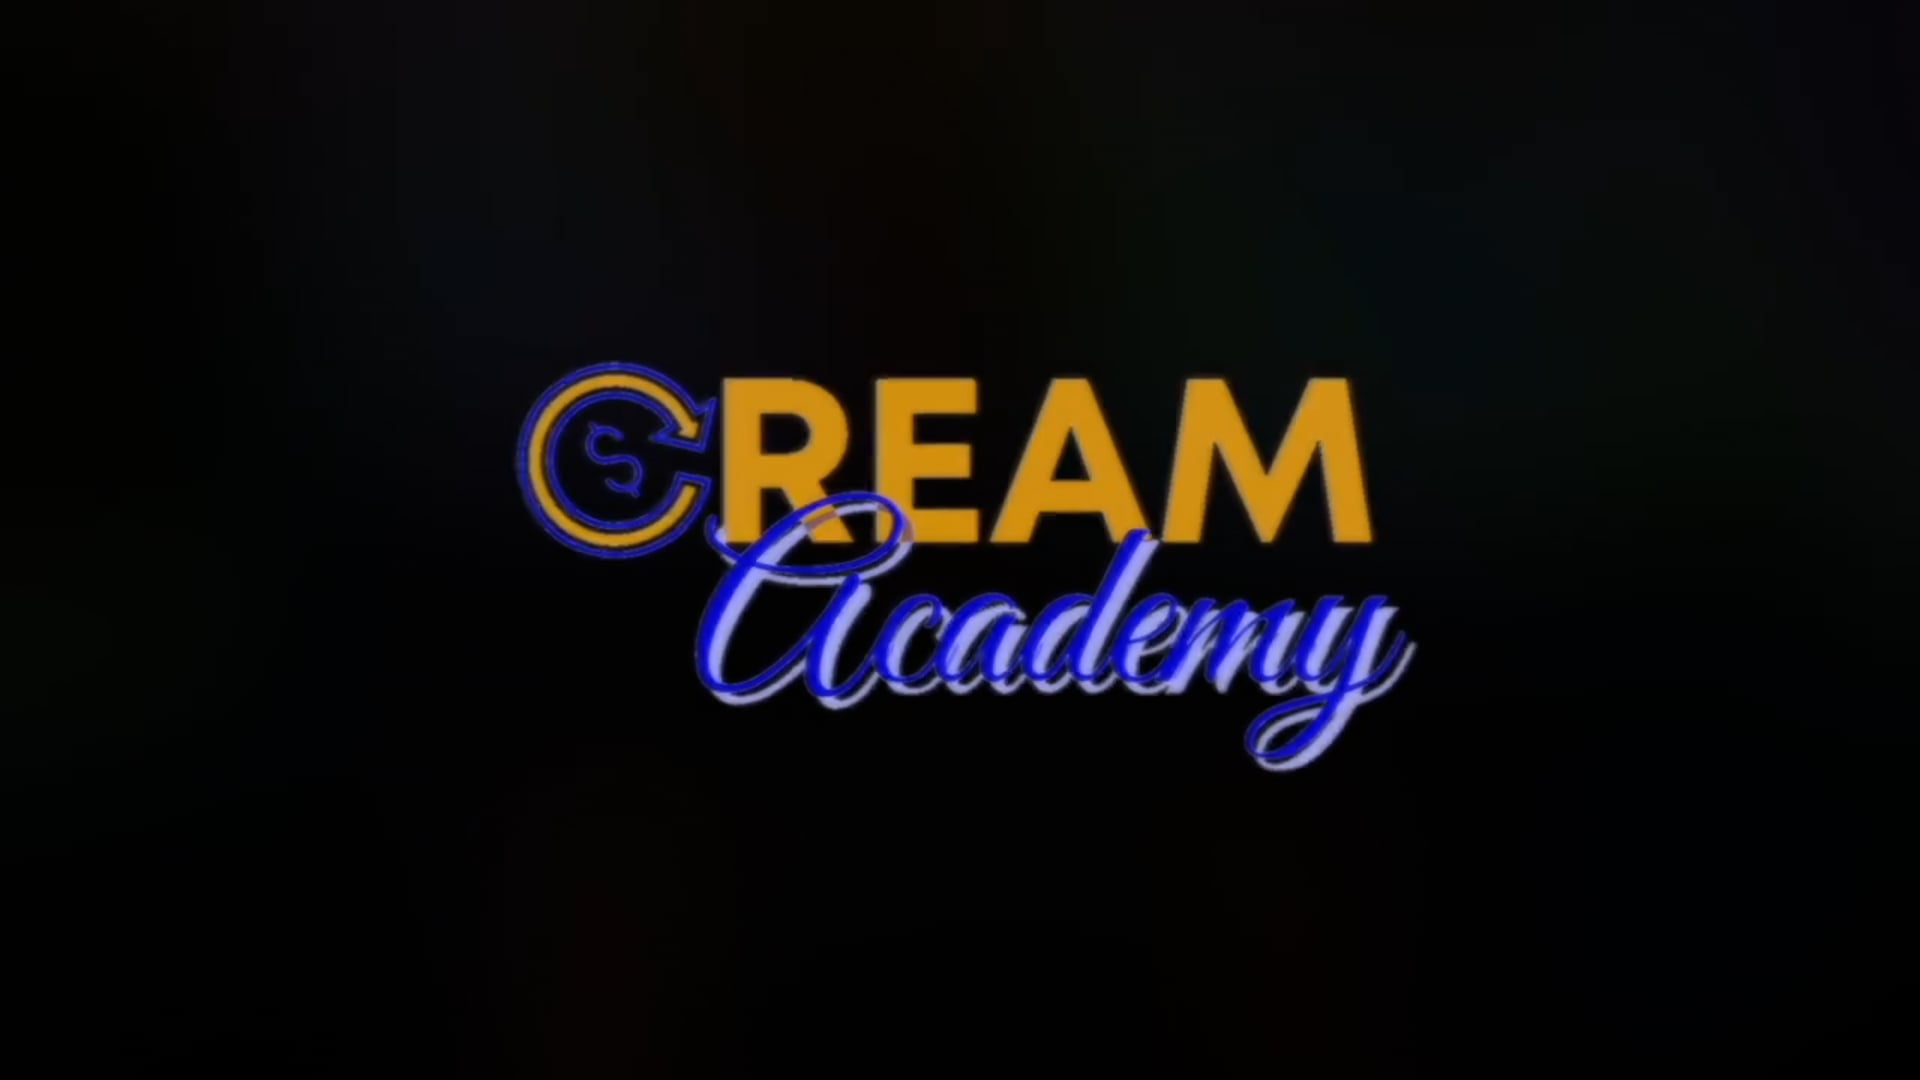 Cream Academy S2 E1